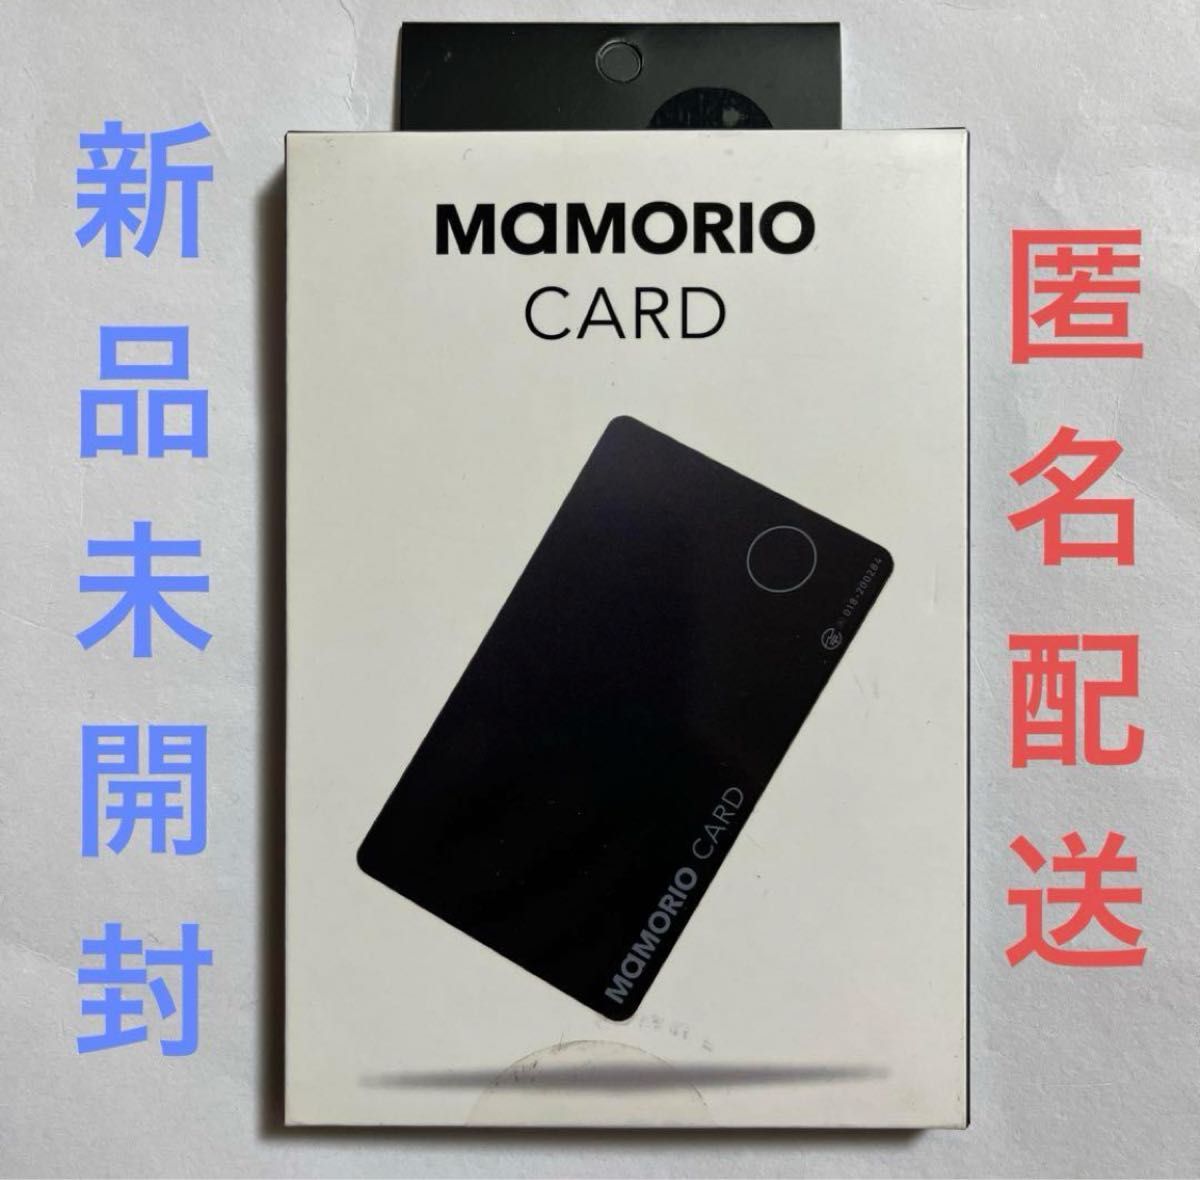 MAMORIO R-MAMD-001-BK BLACK マモリオカード